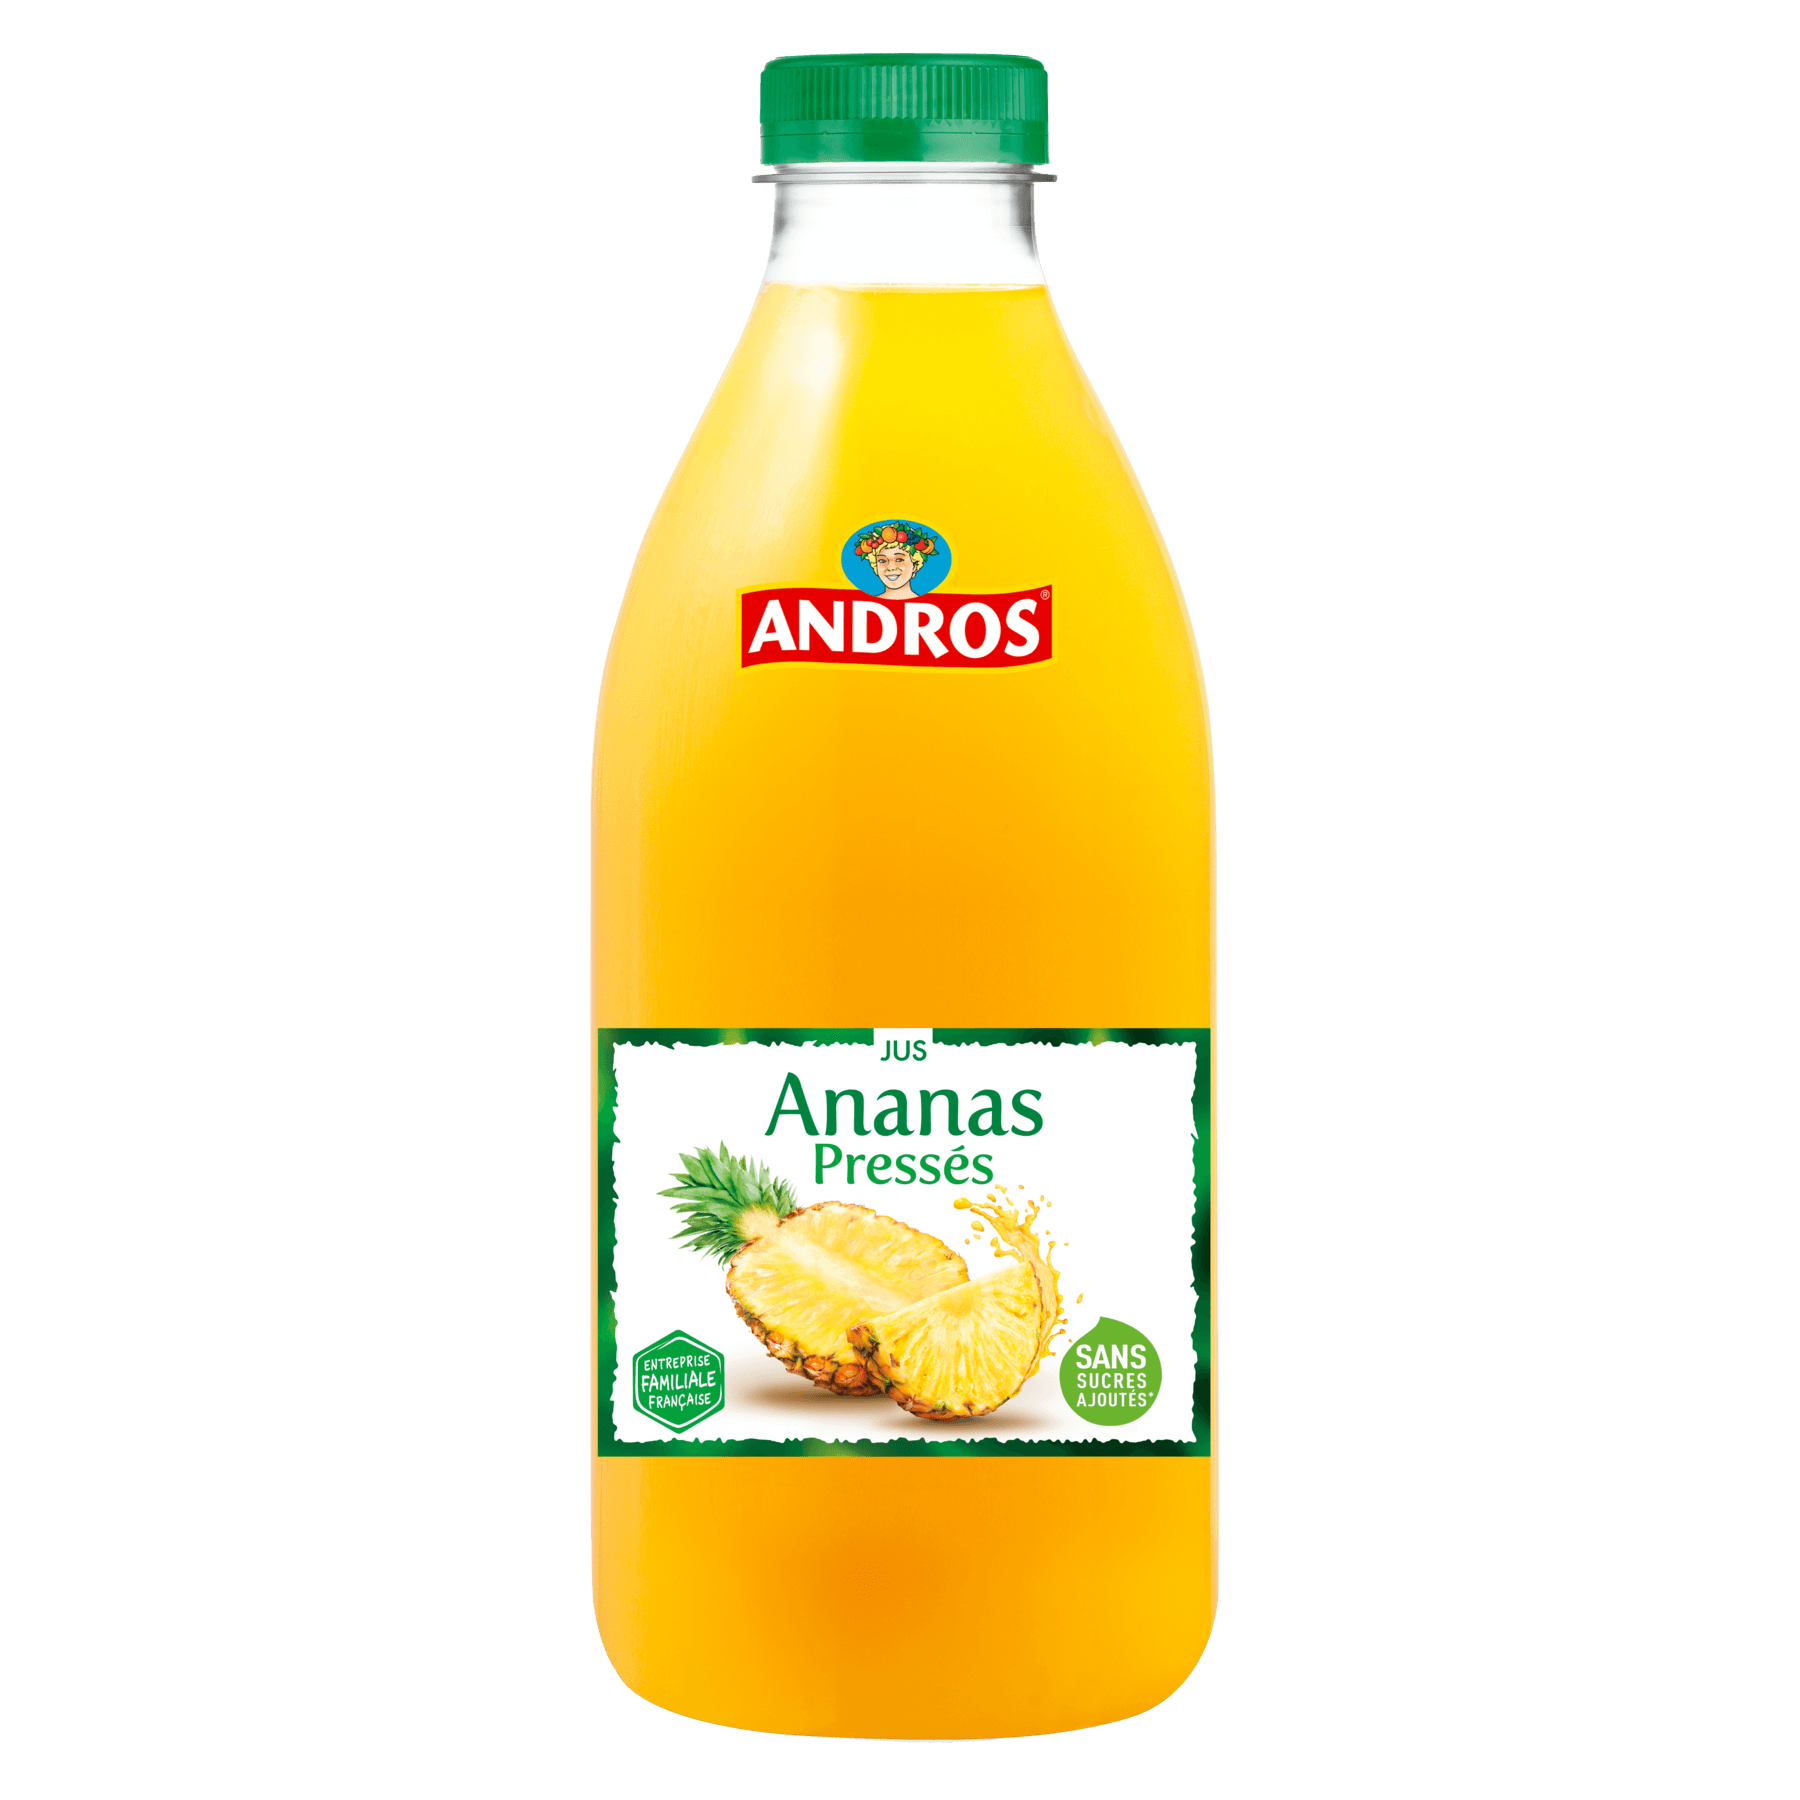 Ananas pressés – Fresh pineapple juice glass bottle – Andros, 1LAnanas pressés – Fresh pineapple juice – Andros, 1L – Chanteroy – Le Vacherin Deli